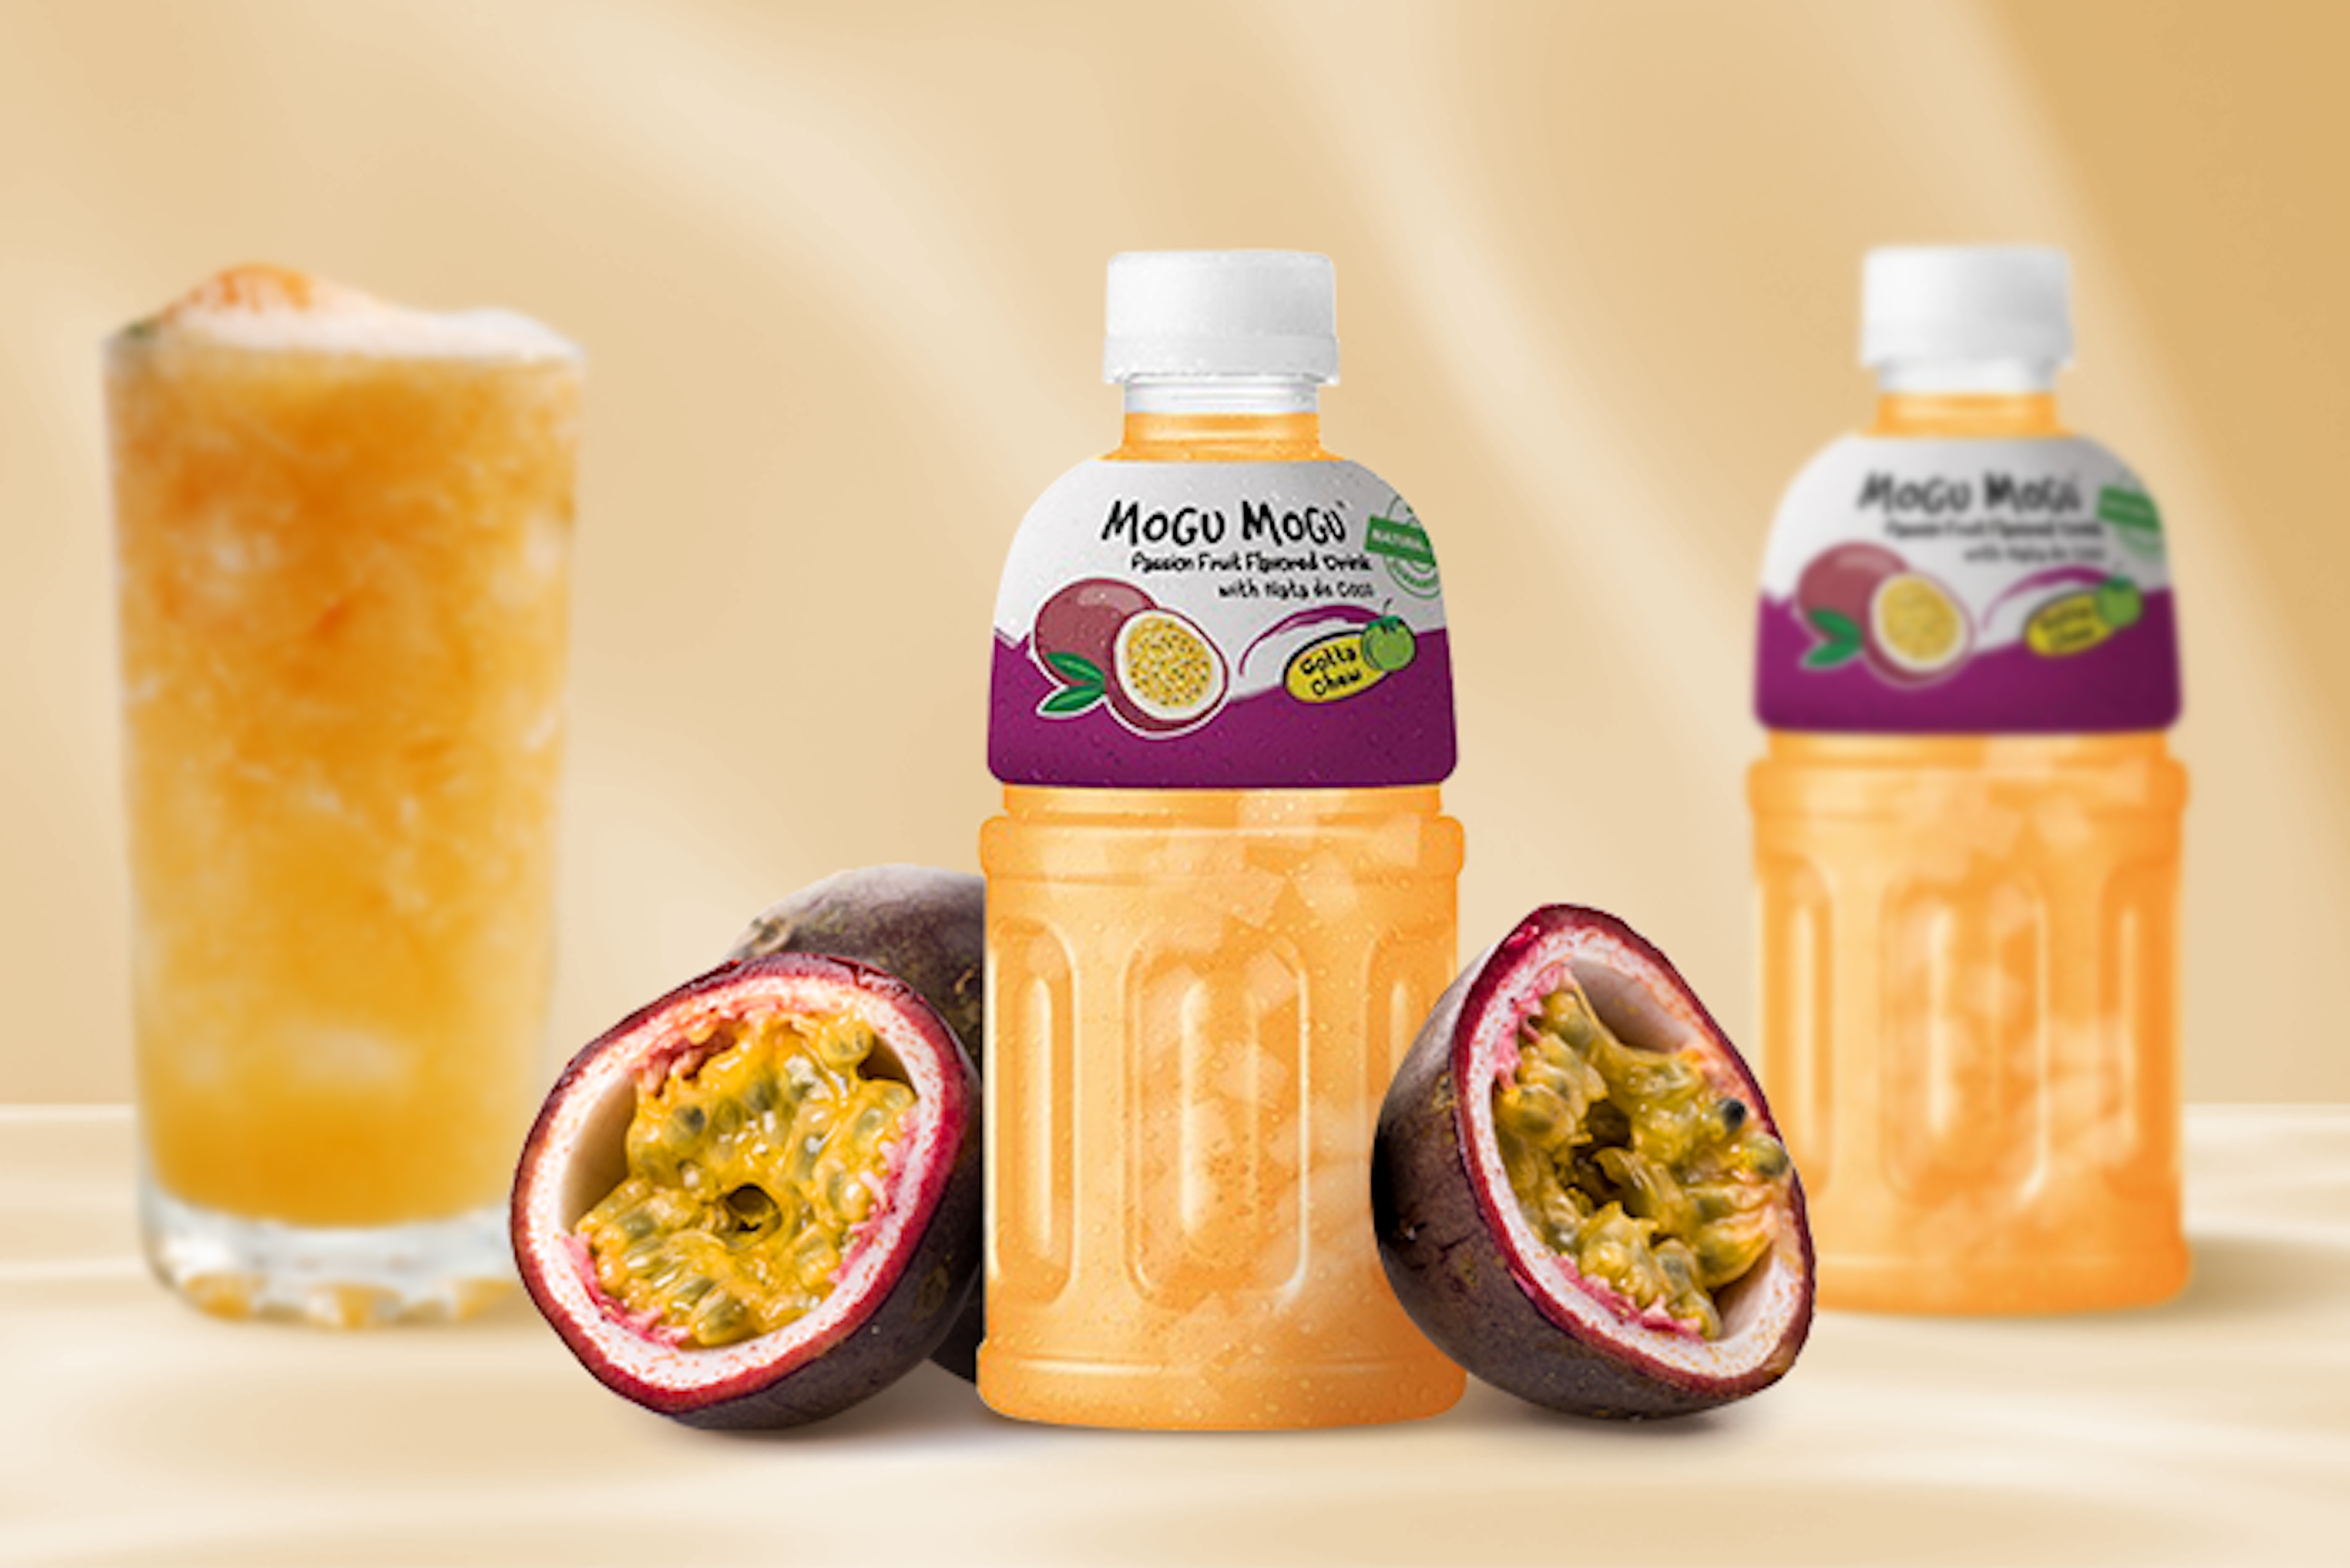 Mogu Mogu Passion Fruit Drink with Nata de Coco 320ml - Refreshingly Exotic